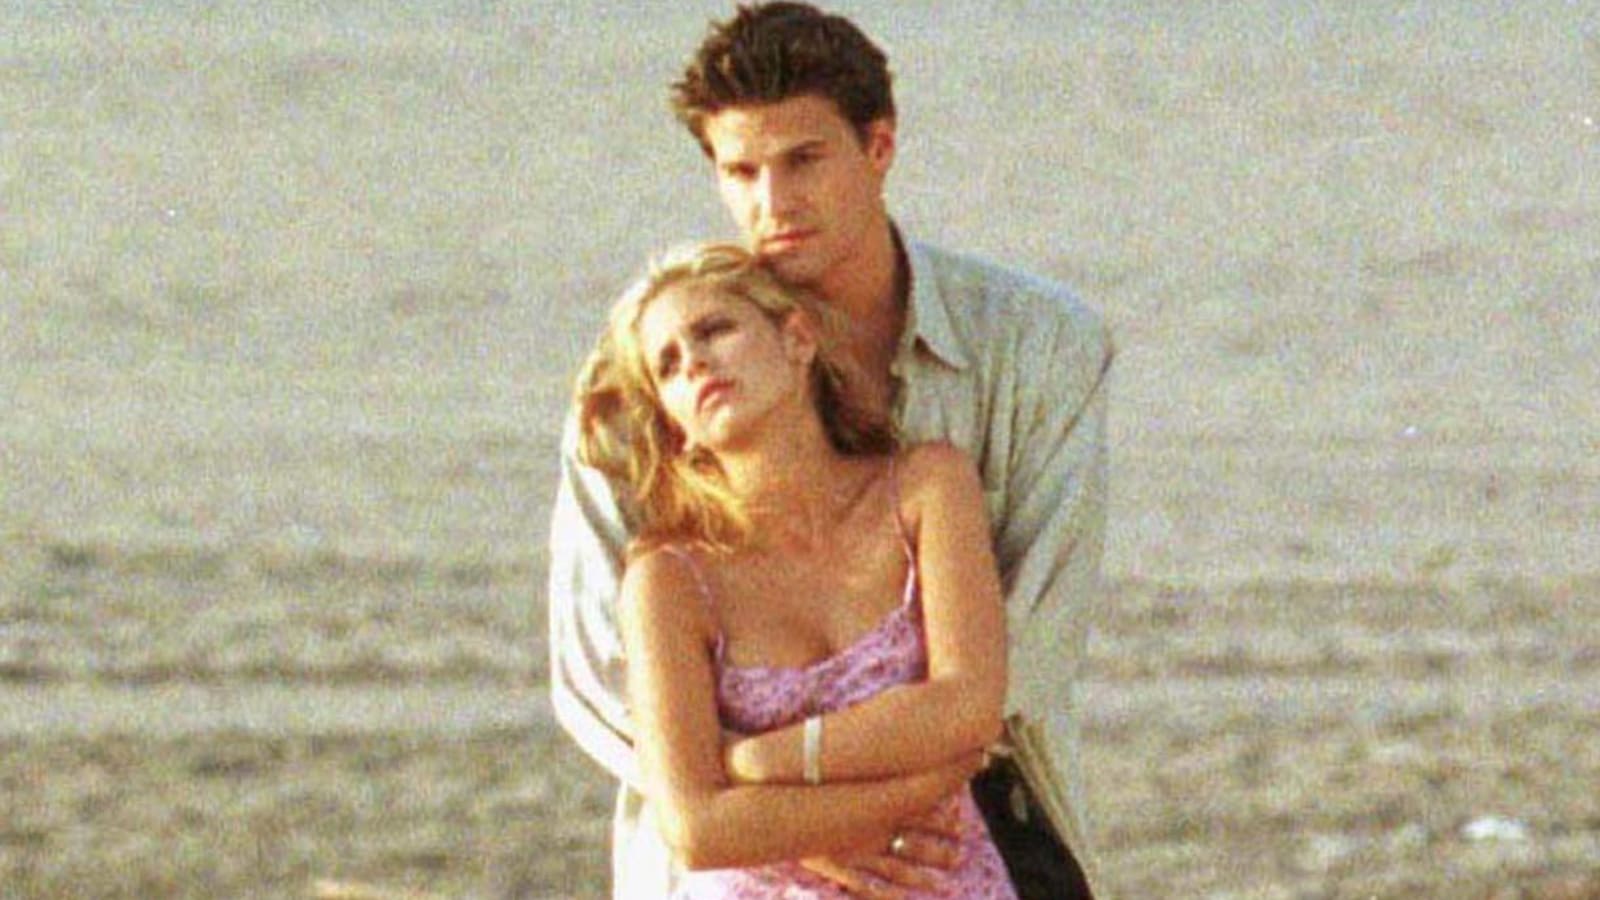 David Boreanaz's 25-ish best “Buffy the Vampire Slayer” and “Angel” Episodes